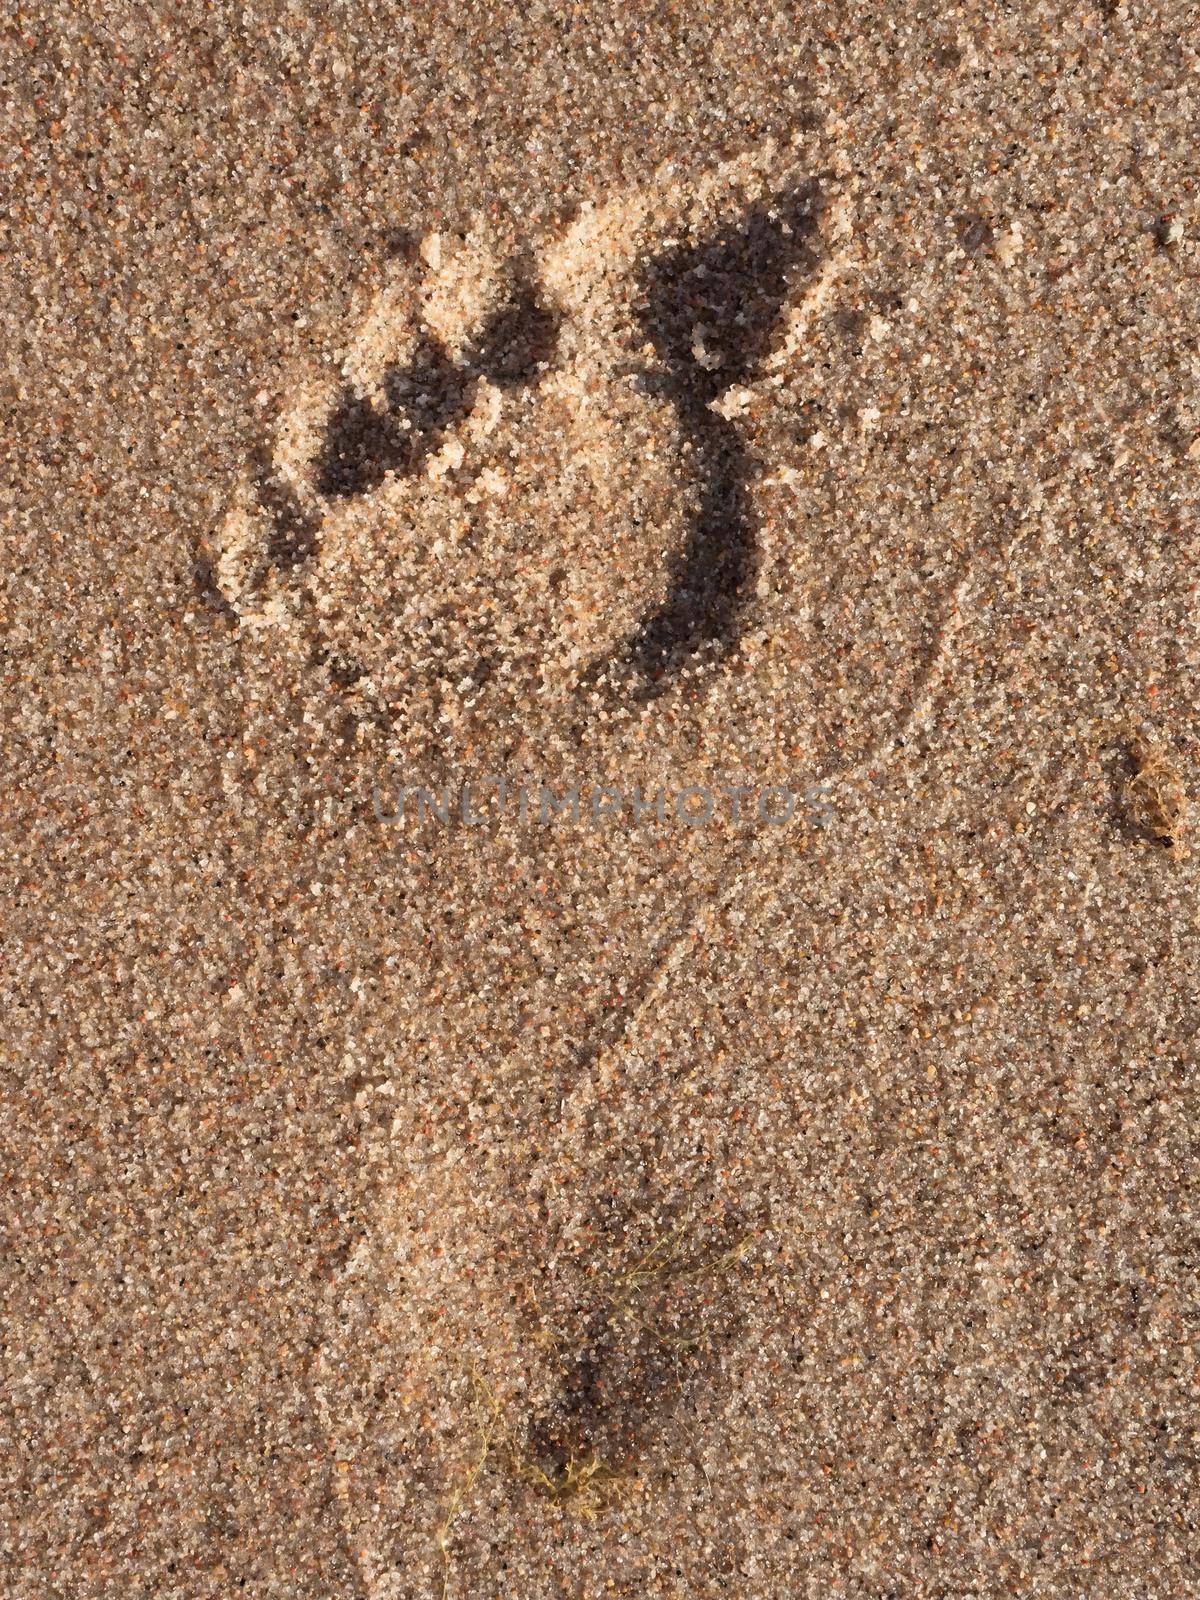 Woman single footprint in wet beach sand by rdonar2